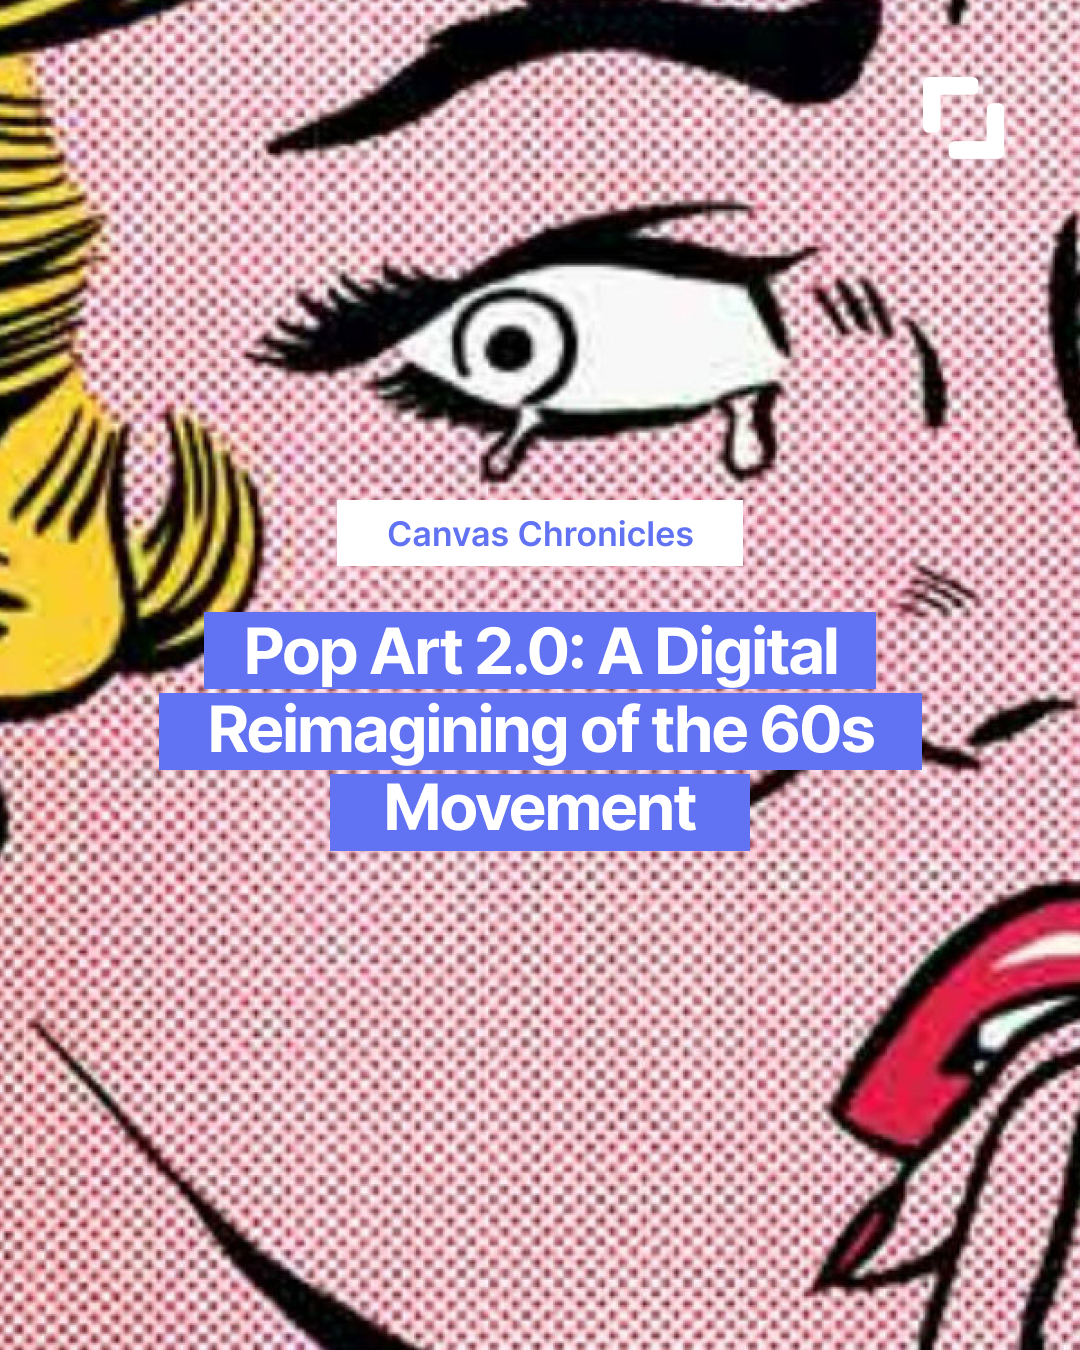 Pop Art 2.0: A Digital Reimagining of the 60s Movement